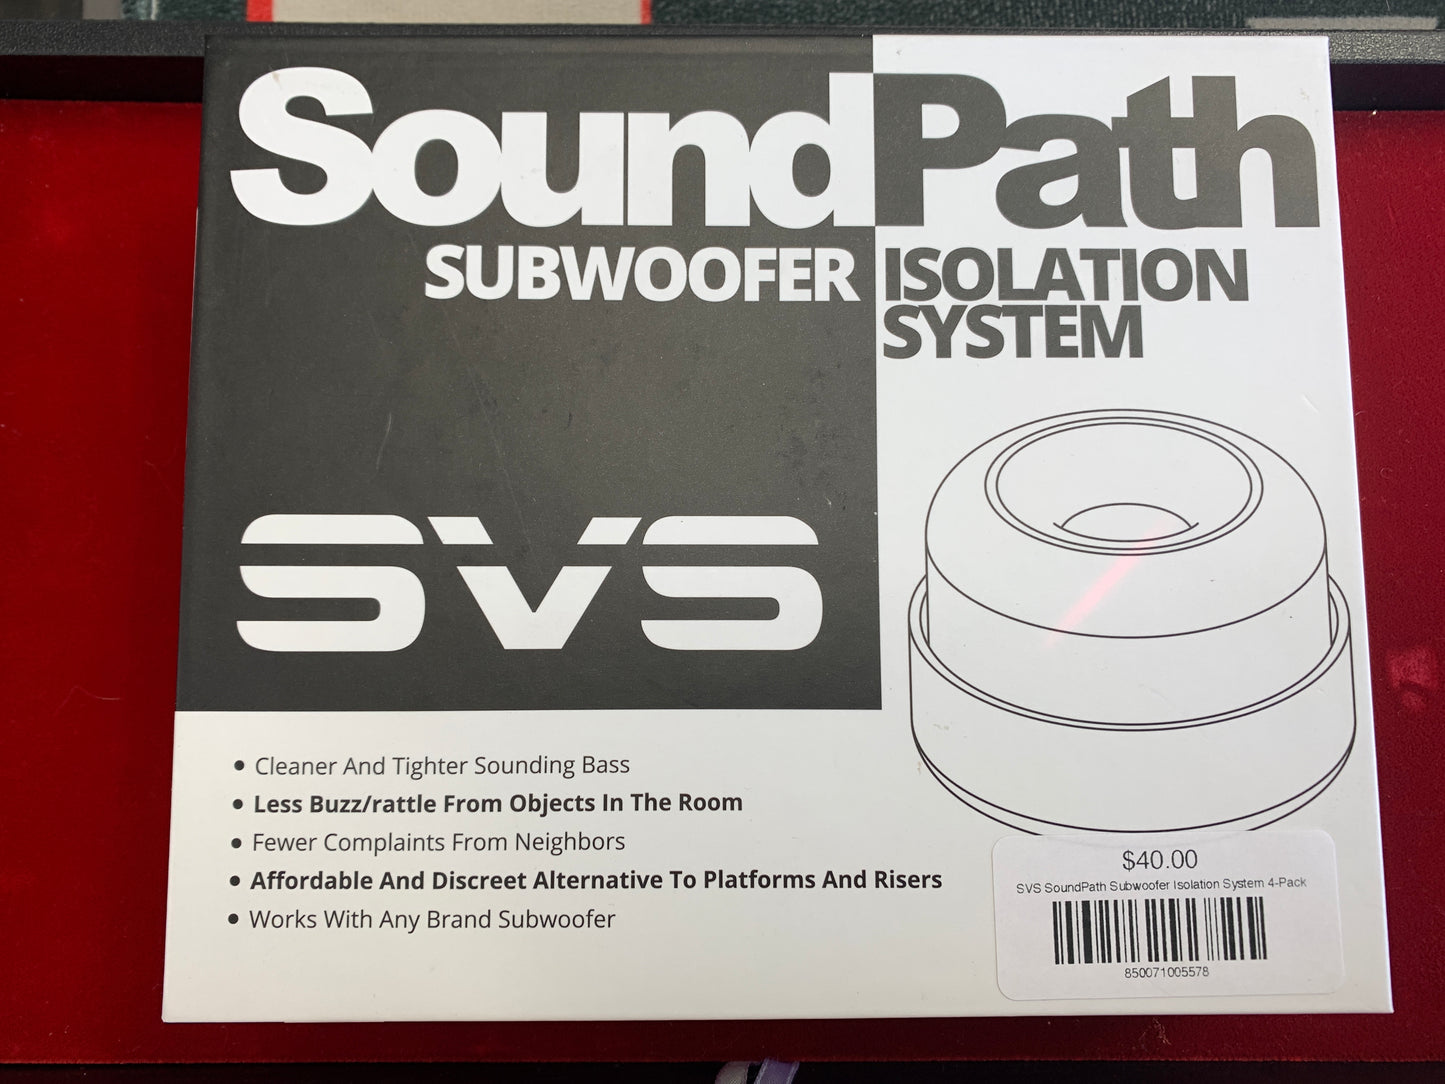 SVS SoundPath Subwoofer Isolation System 4-Pack